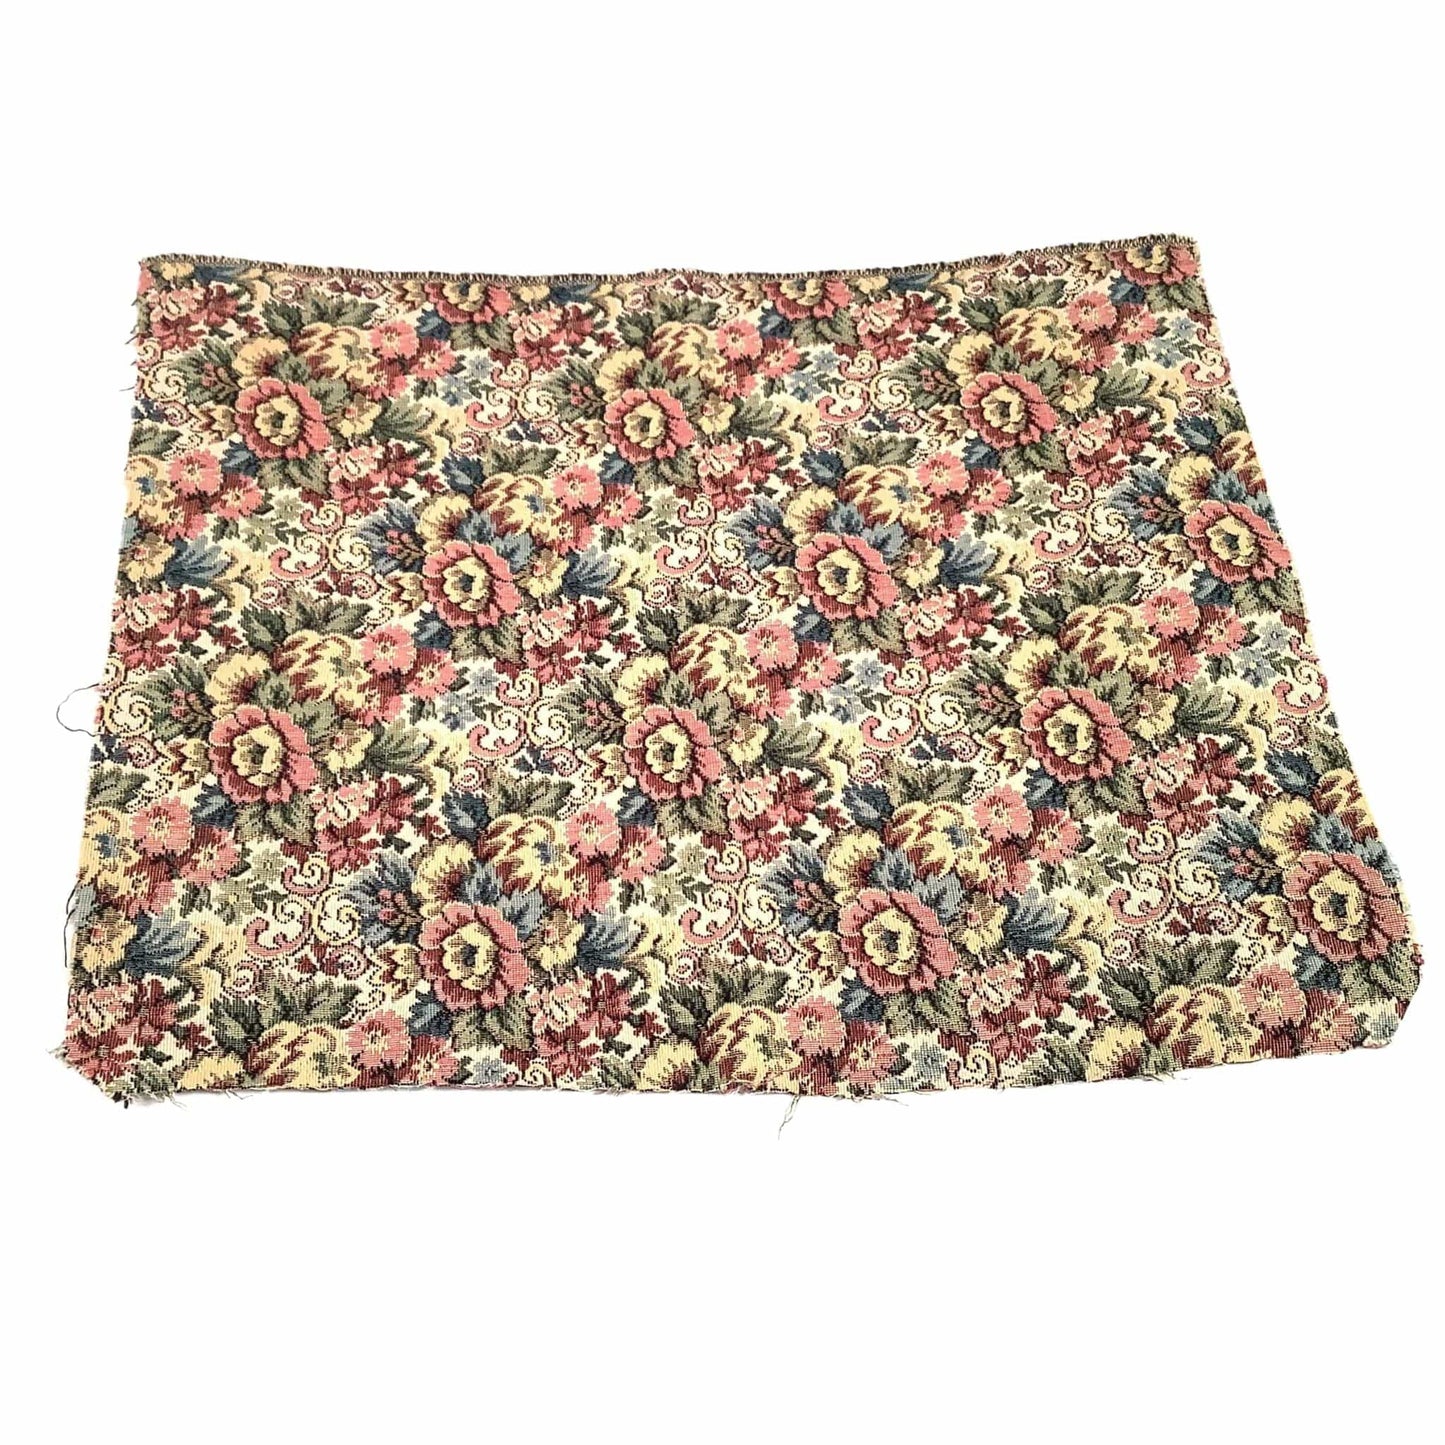 Vintage Floral Fabric Sample Multi / Cotton / Vintage 1980s